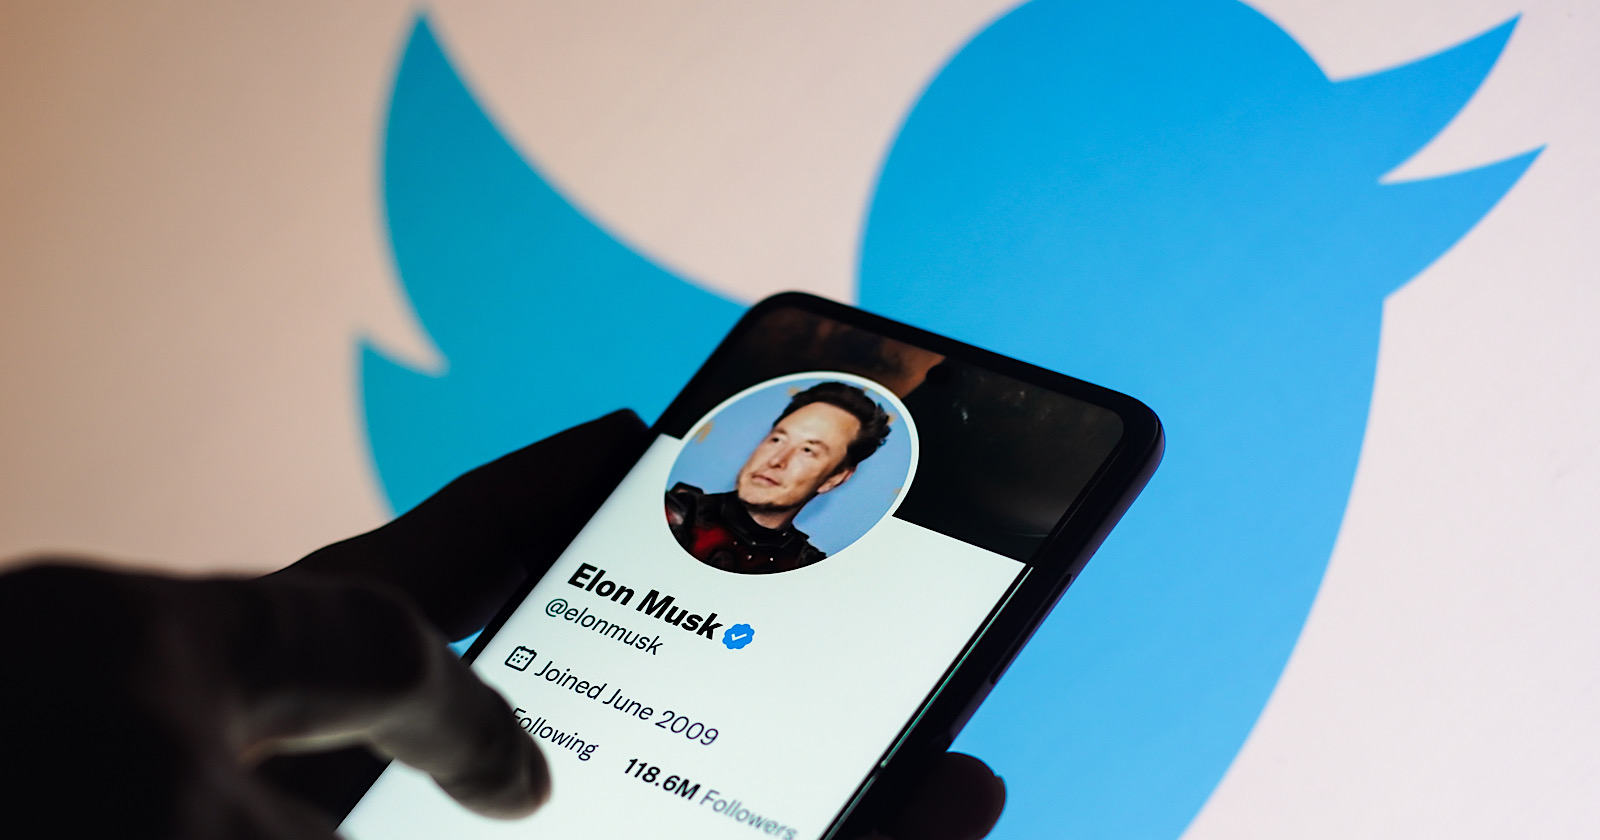 Twitter's Google Rankings Plummet Following Actions By Elon Musk